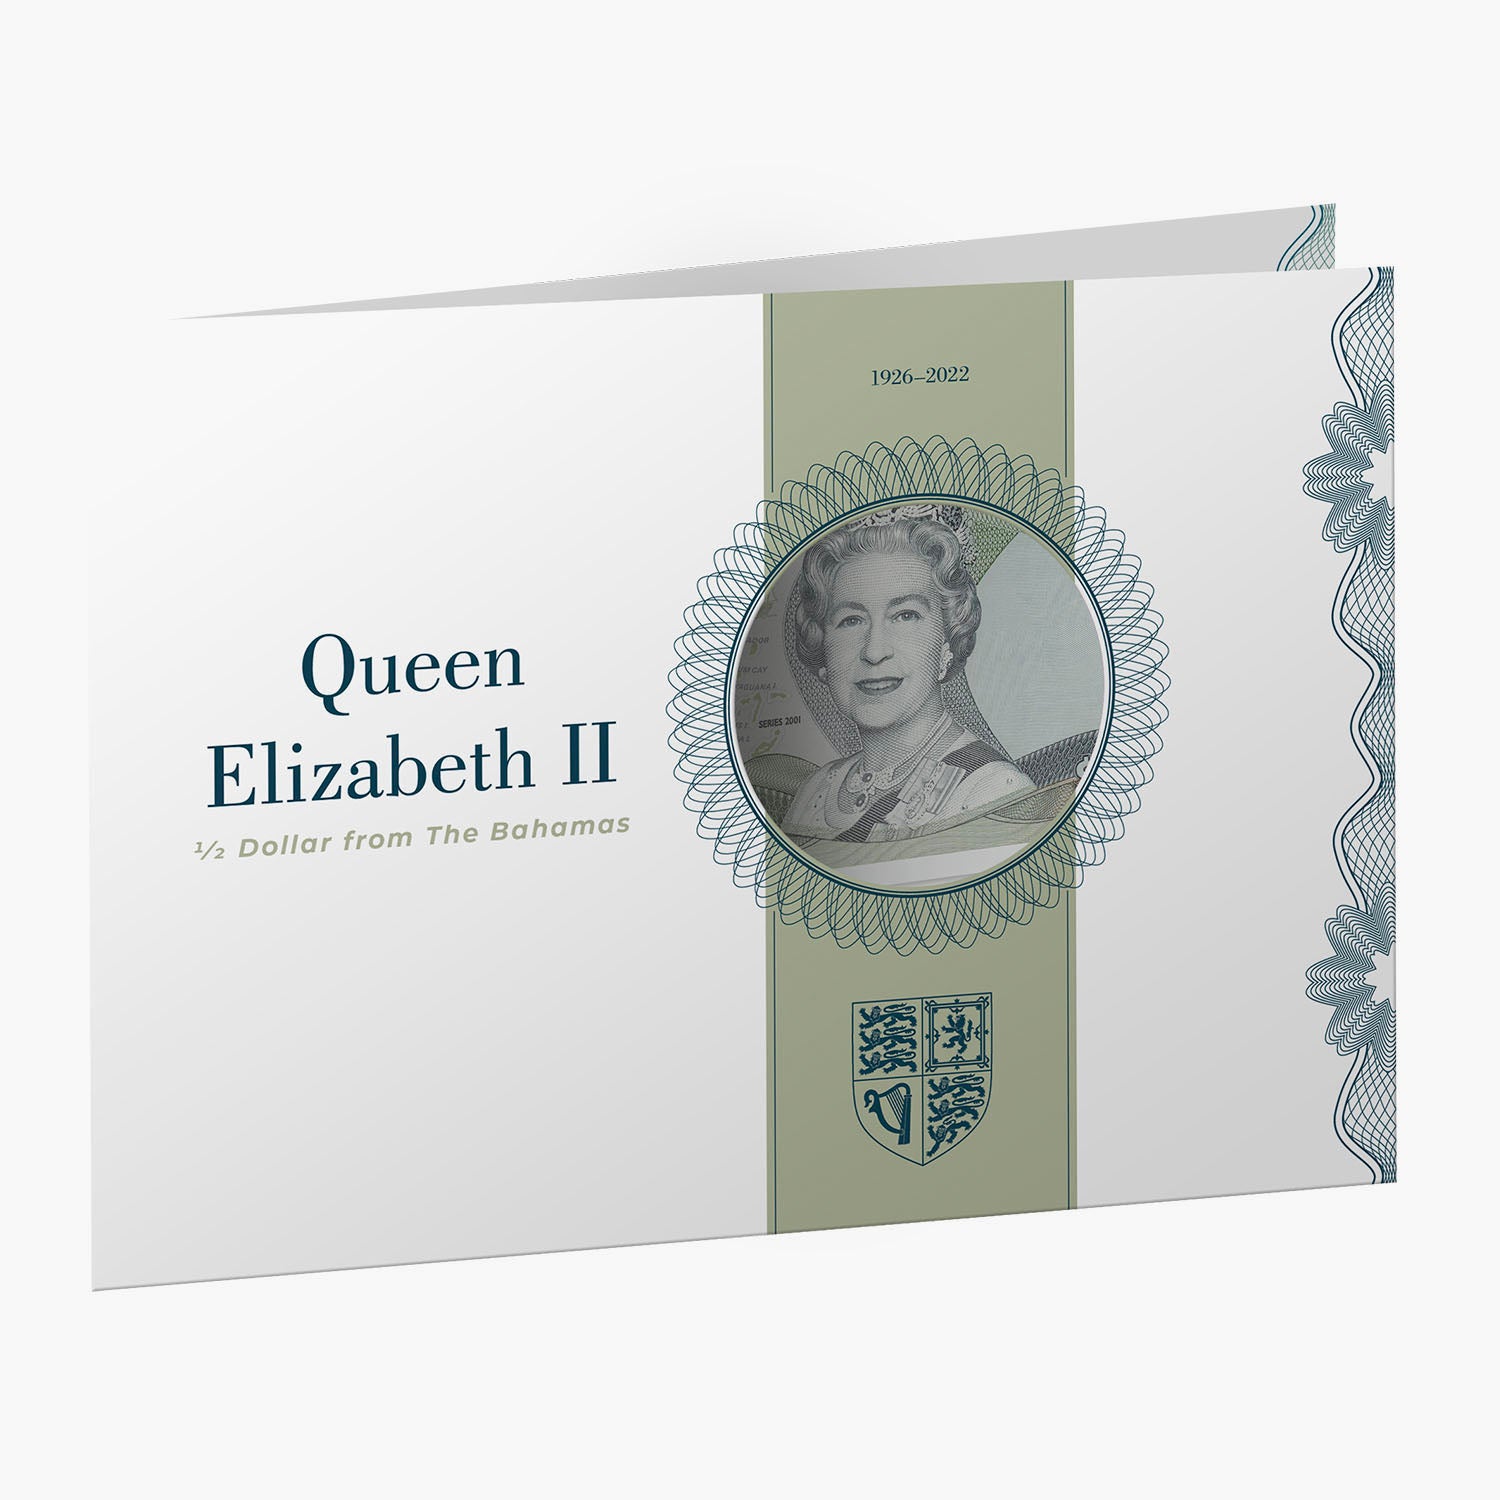 Her Majesty Queen Elizabeth II Royal Half Dollar Banknote